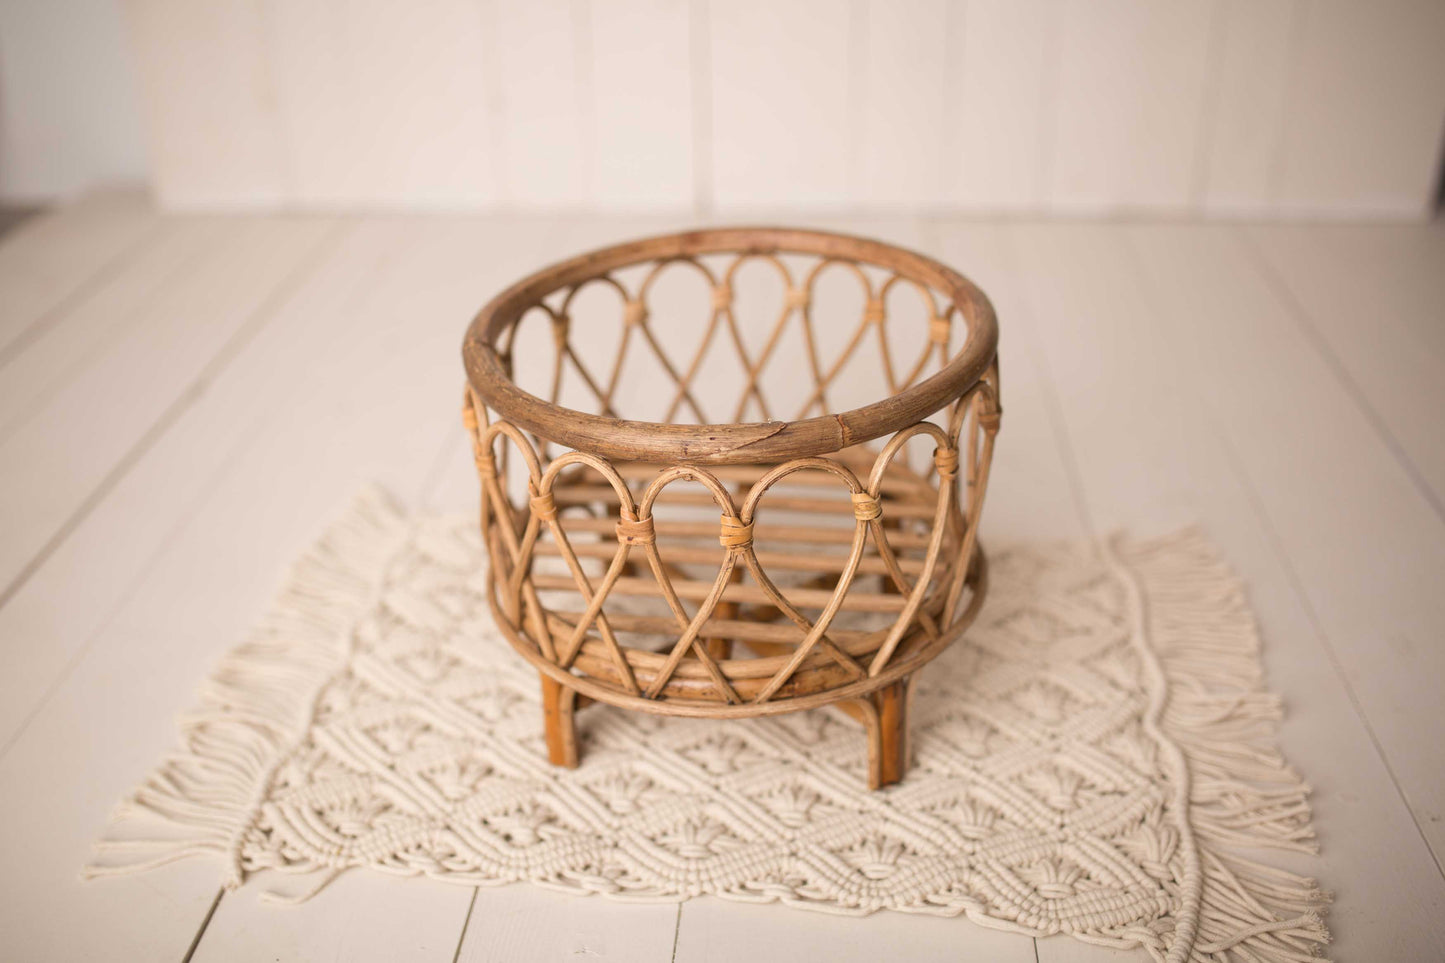 The Johna -Bamboo Round Basket